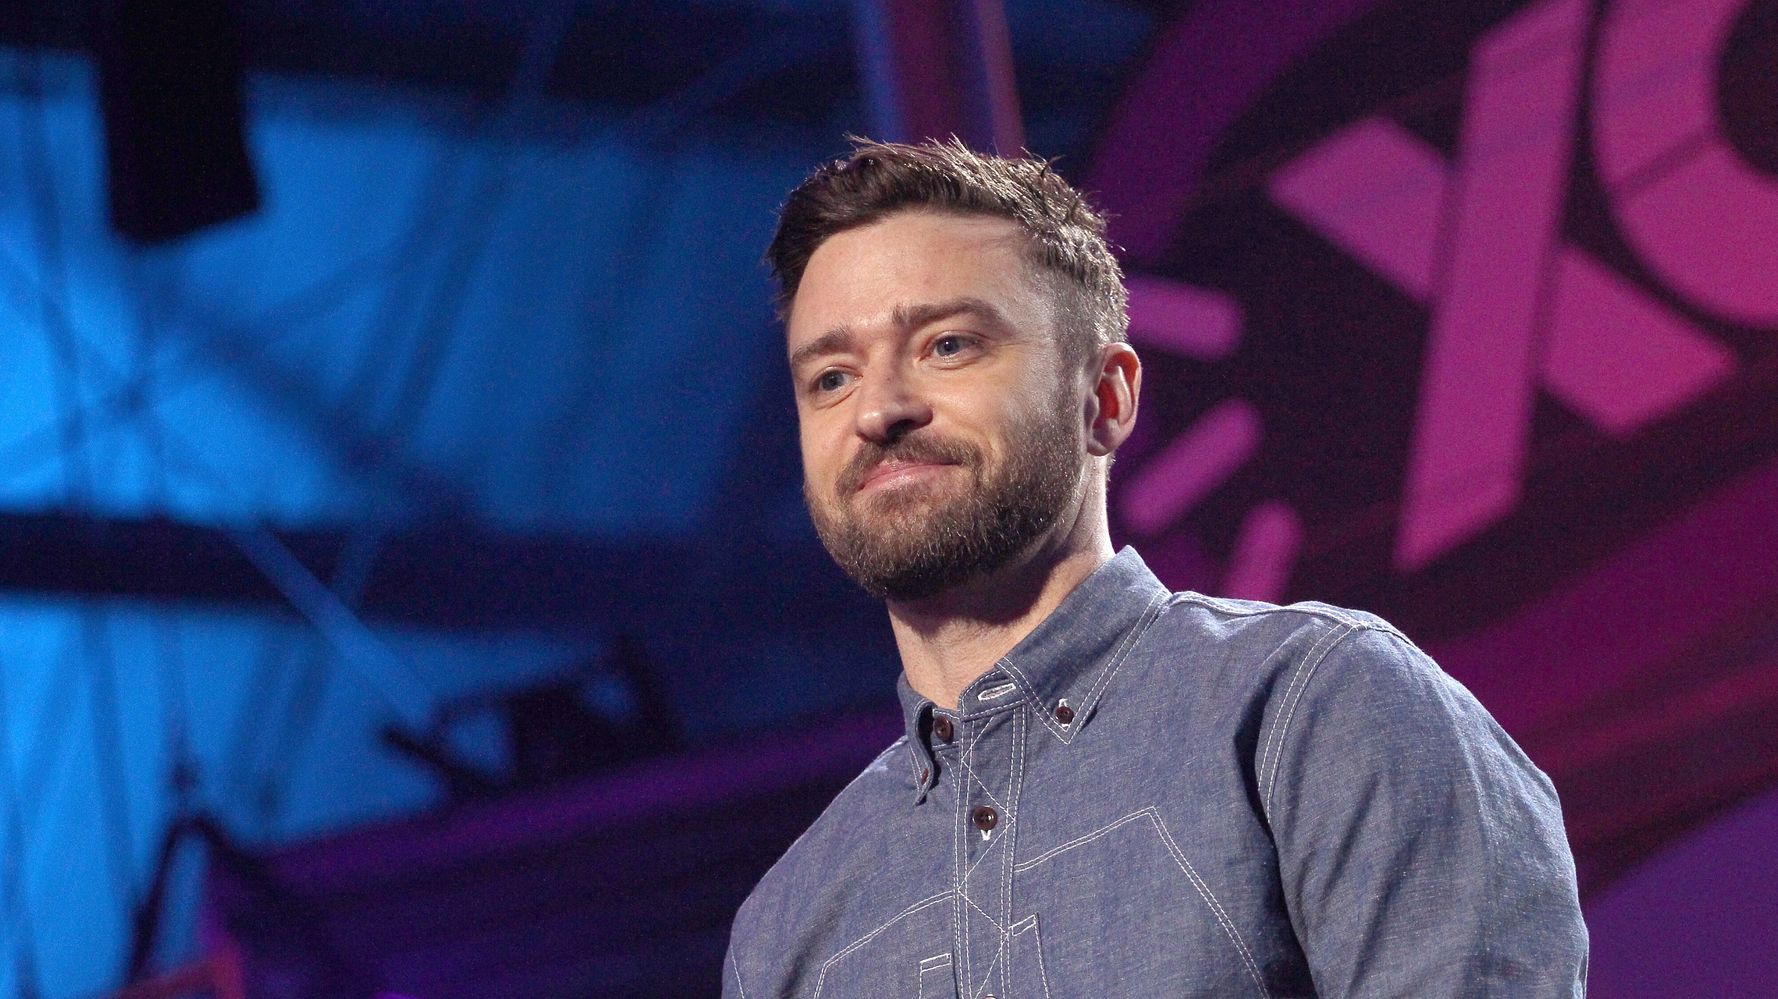 Justin Timberlake To Headline The 2018 Super Bowl Halftime Show Huffpost